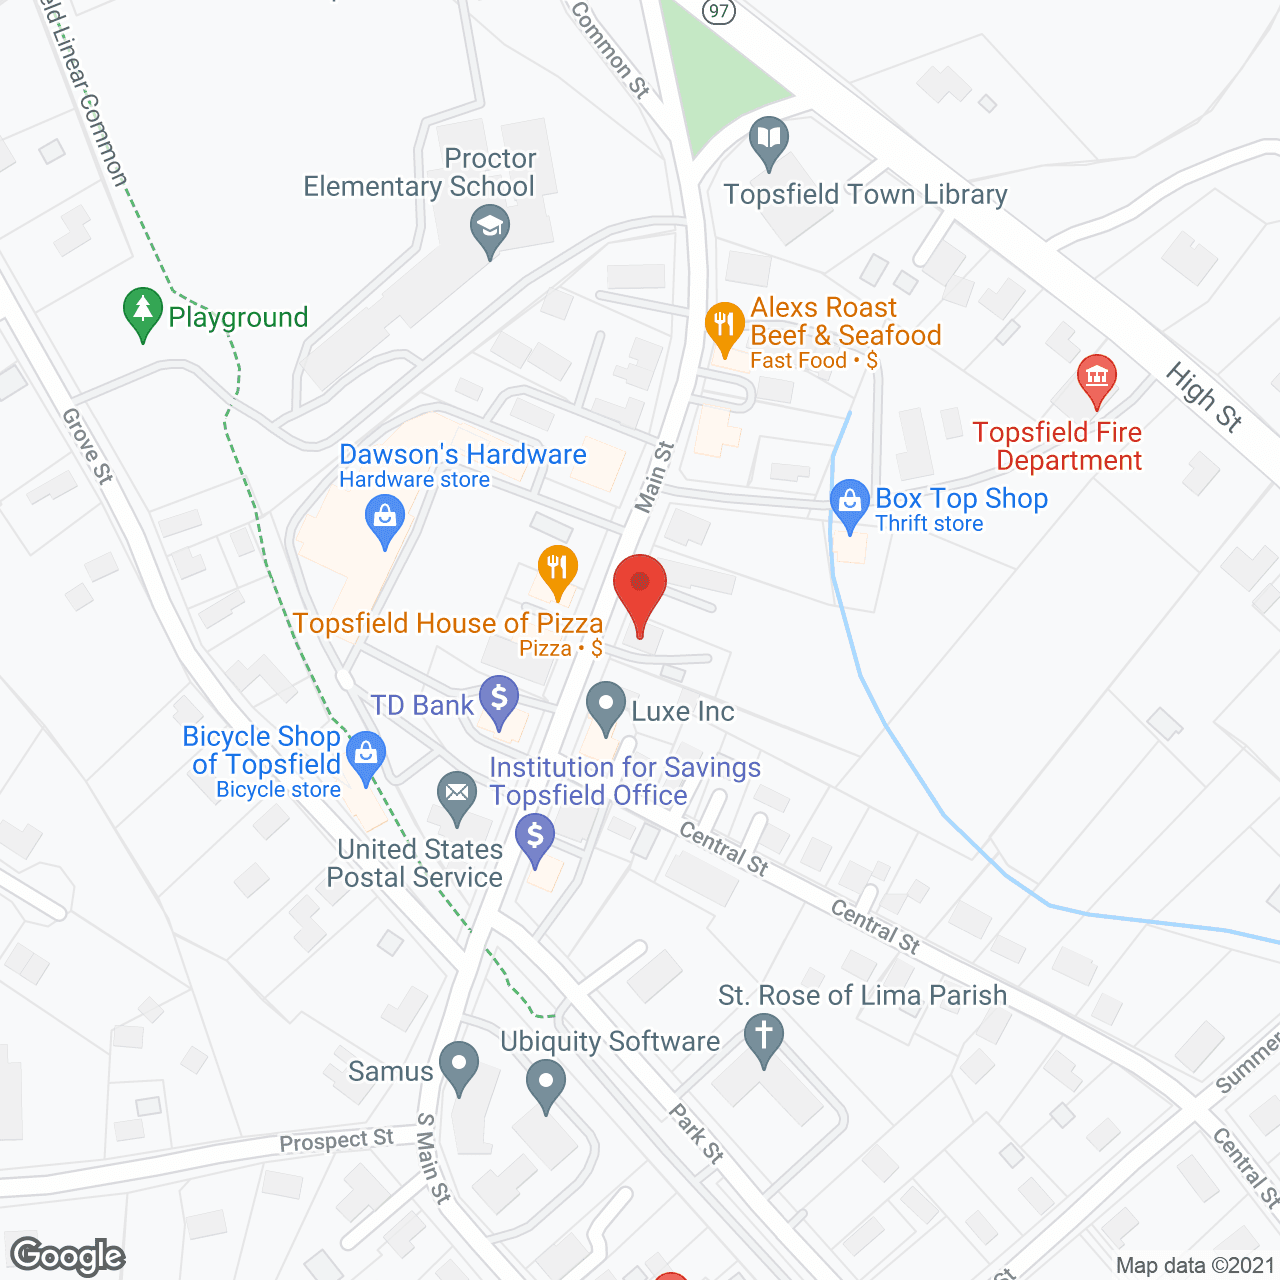 Harborside Healthcare in google map